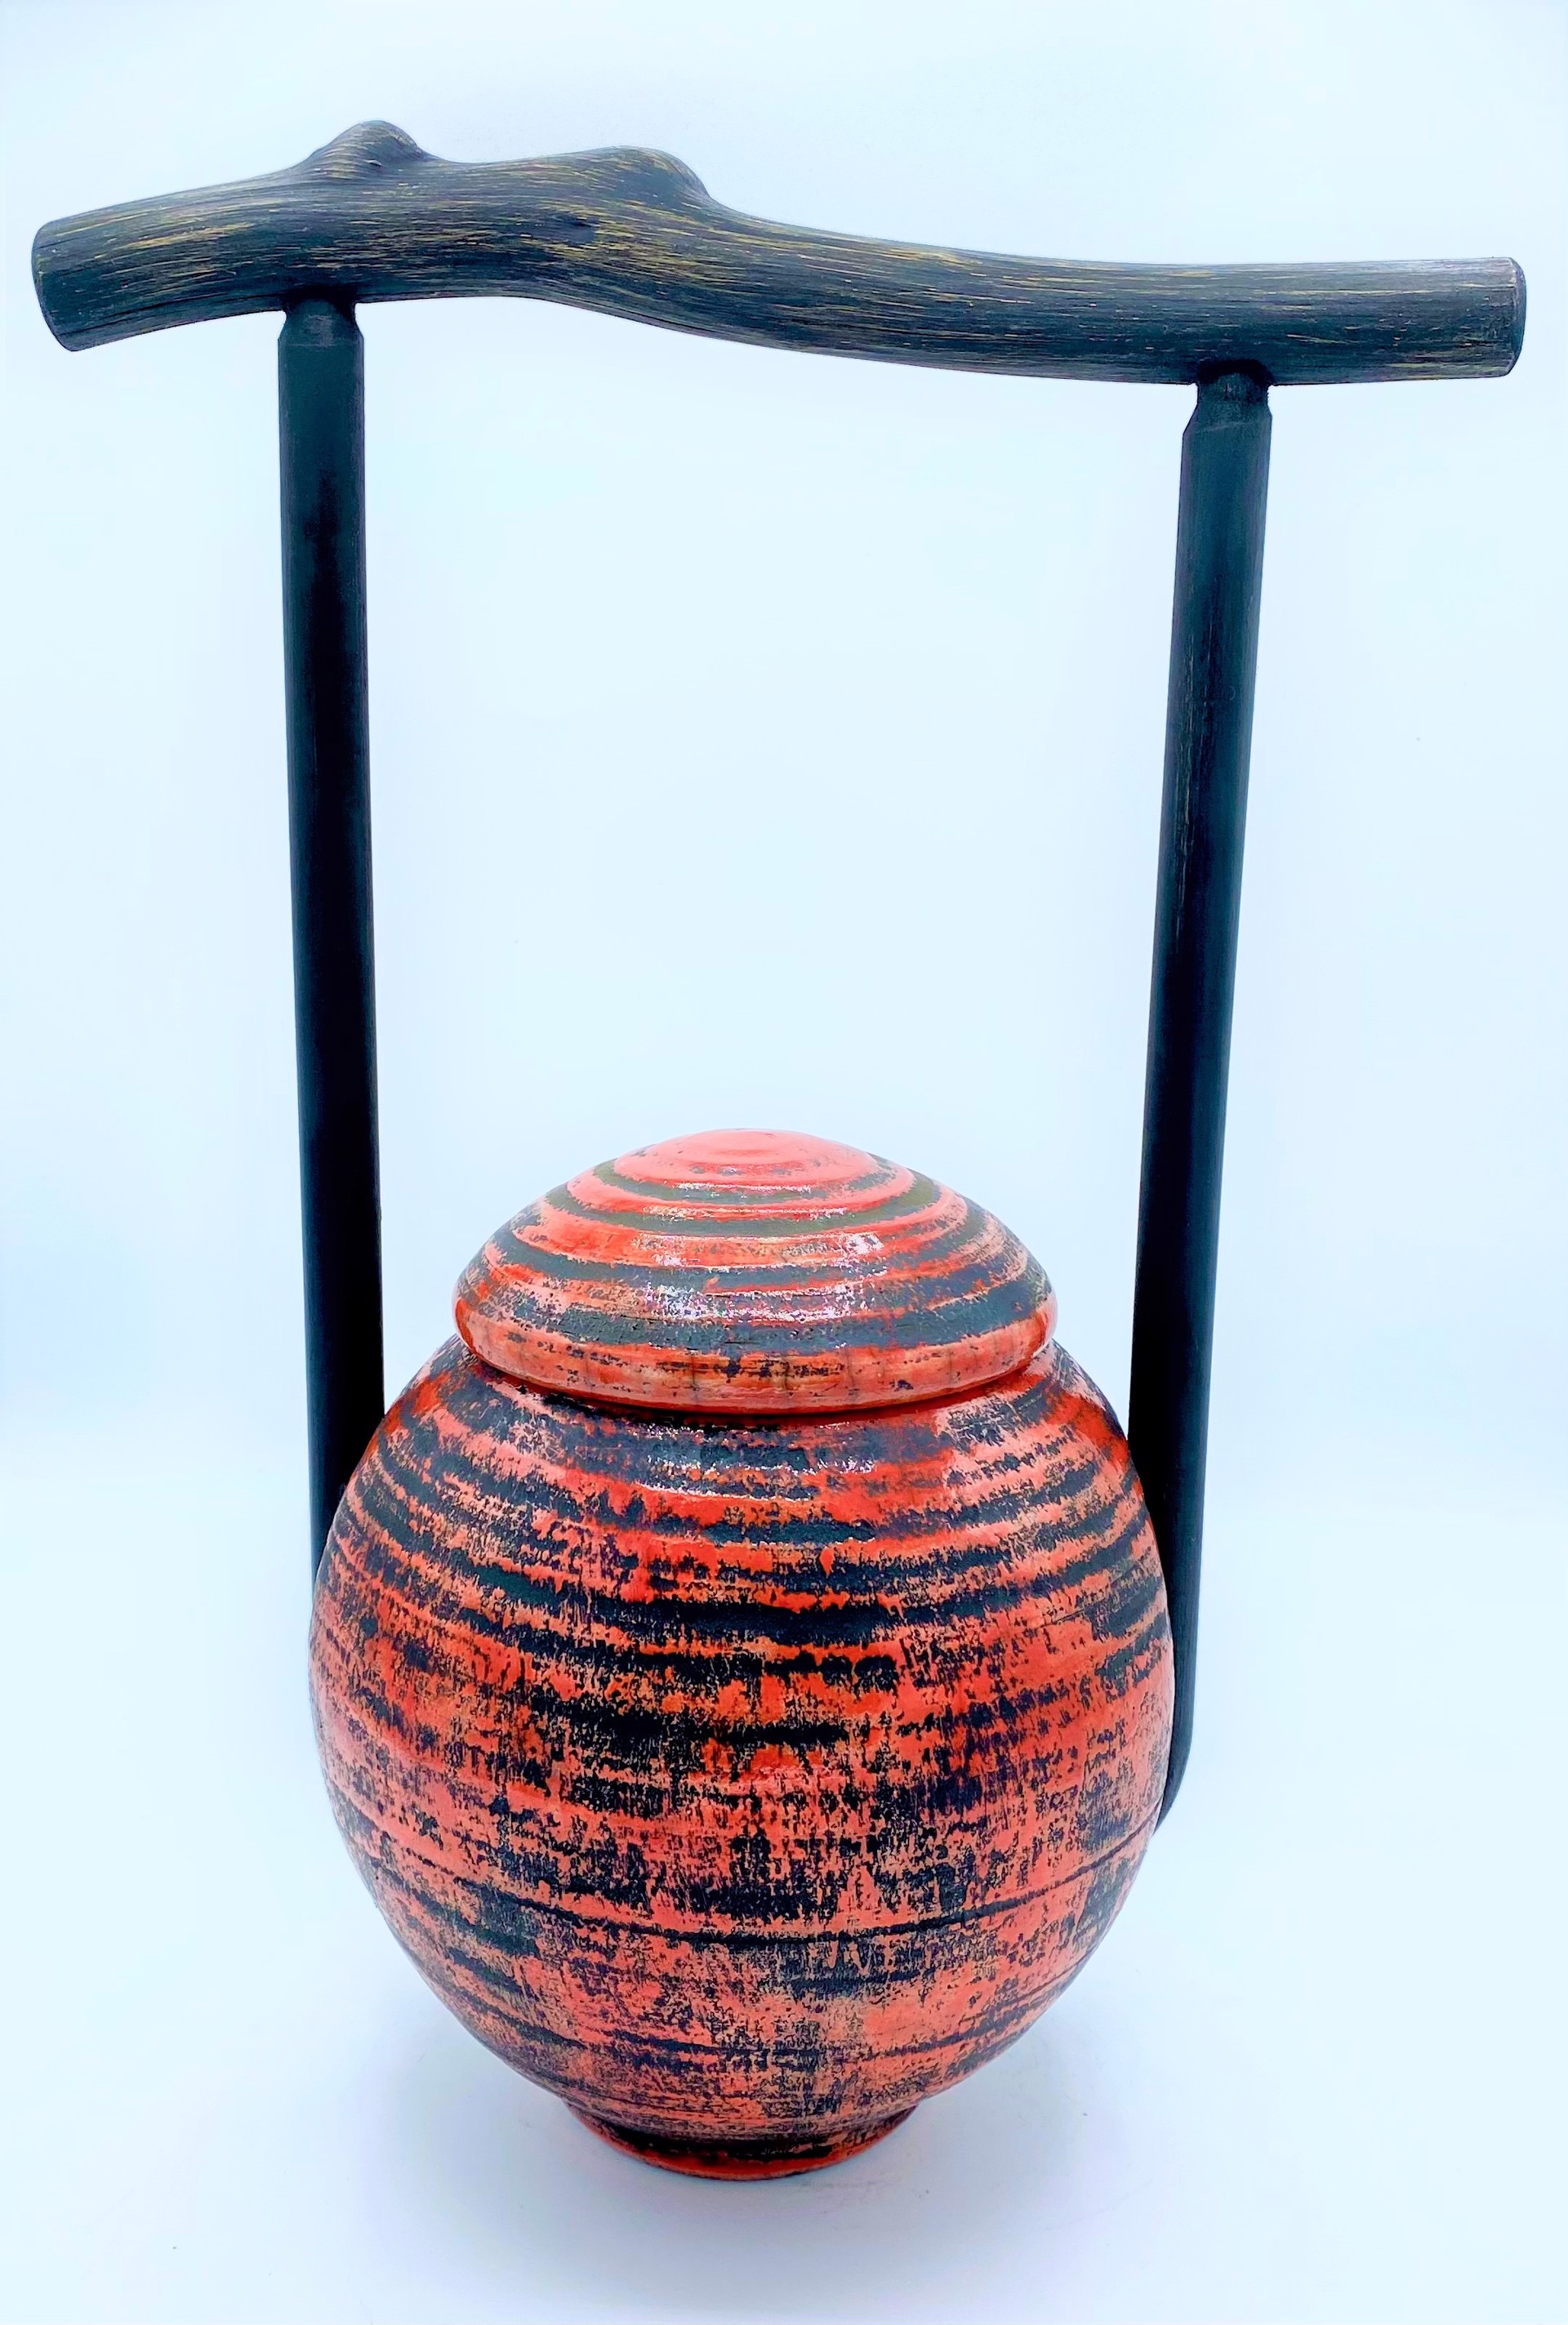 Black Handled Red Pot by Obie Clark